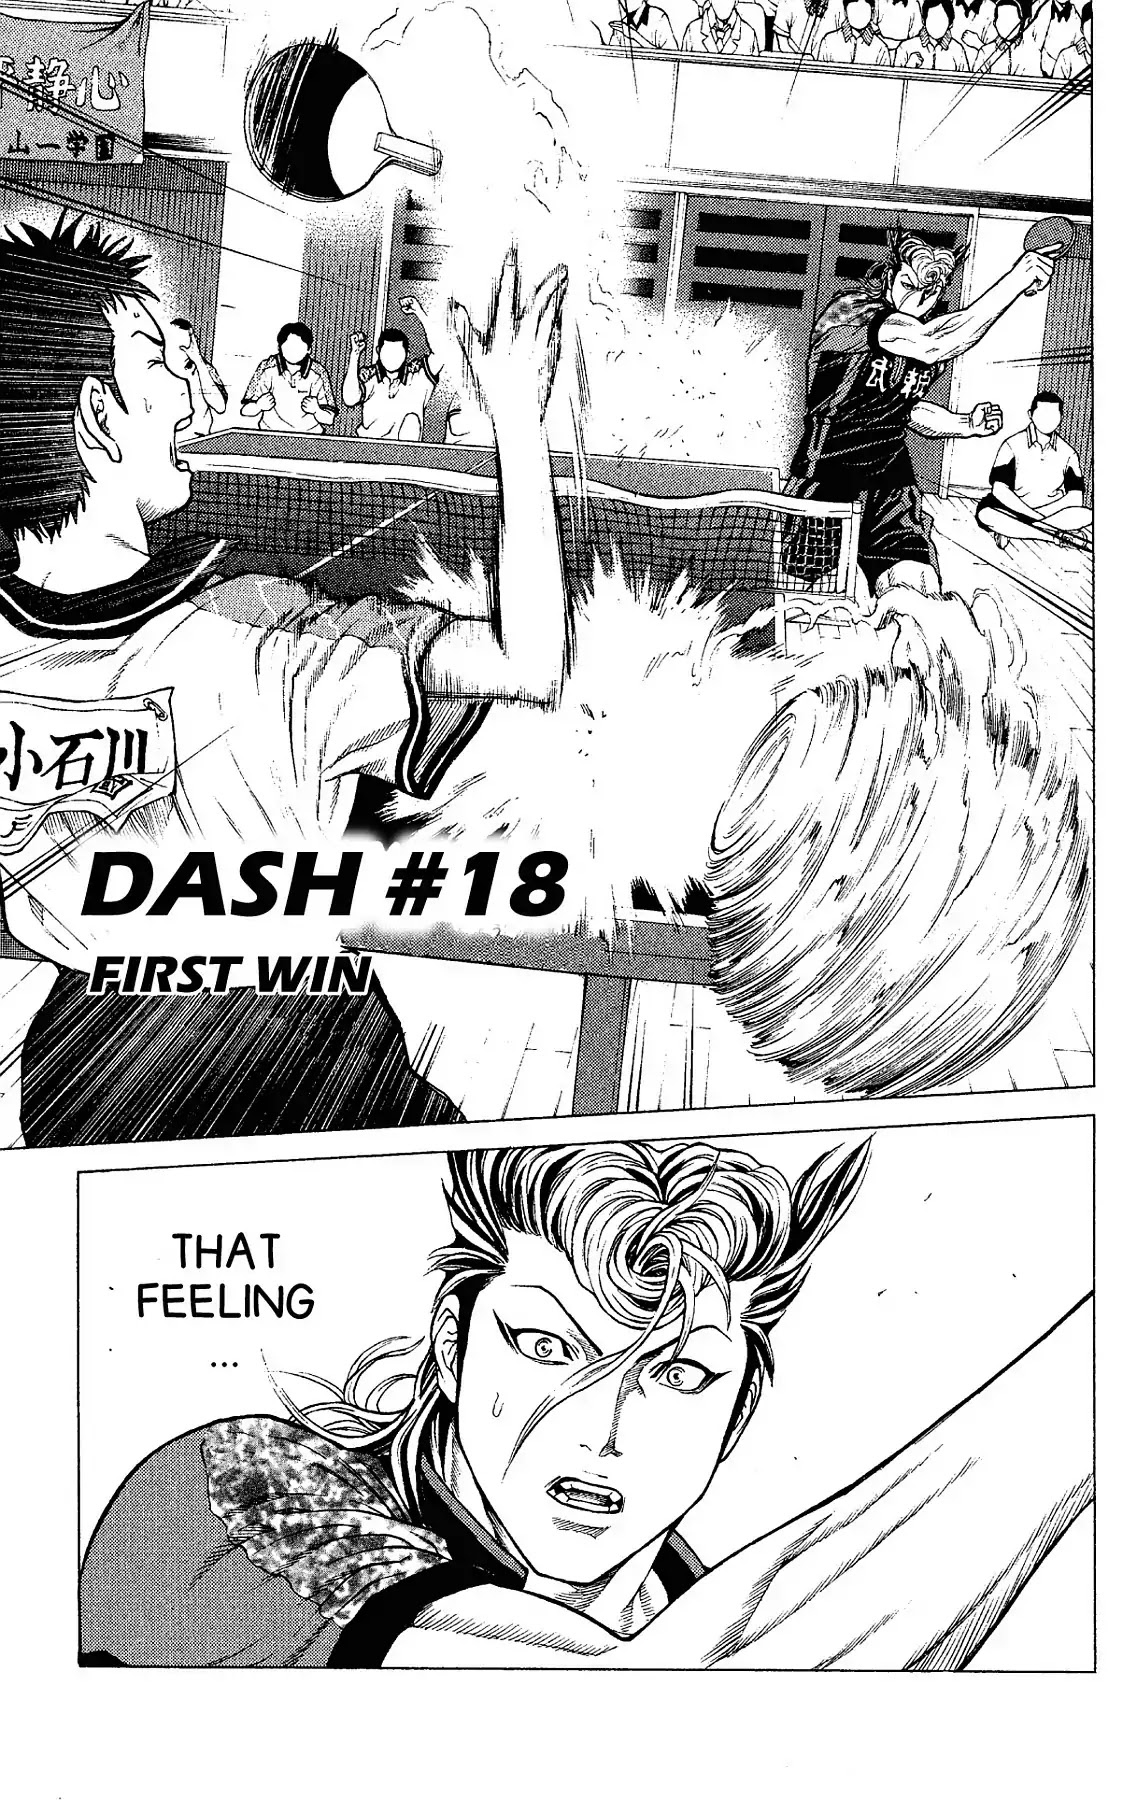 Takkyuu Dash!! Chapter 18: VOL.5 DASH #18: FIRST WIN